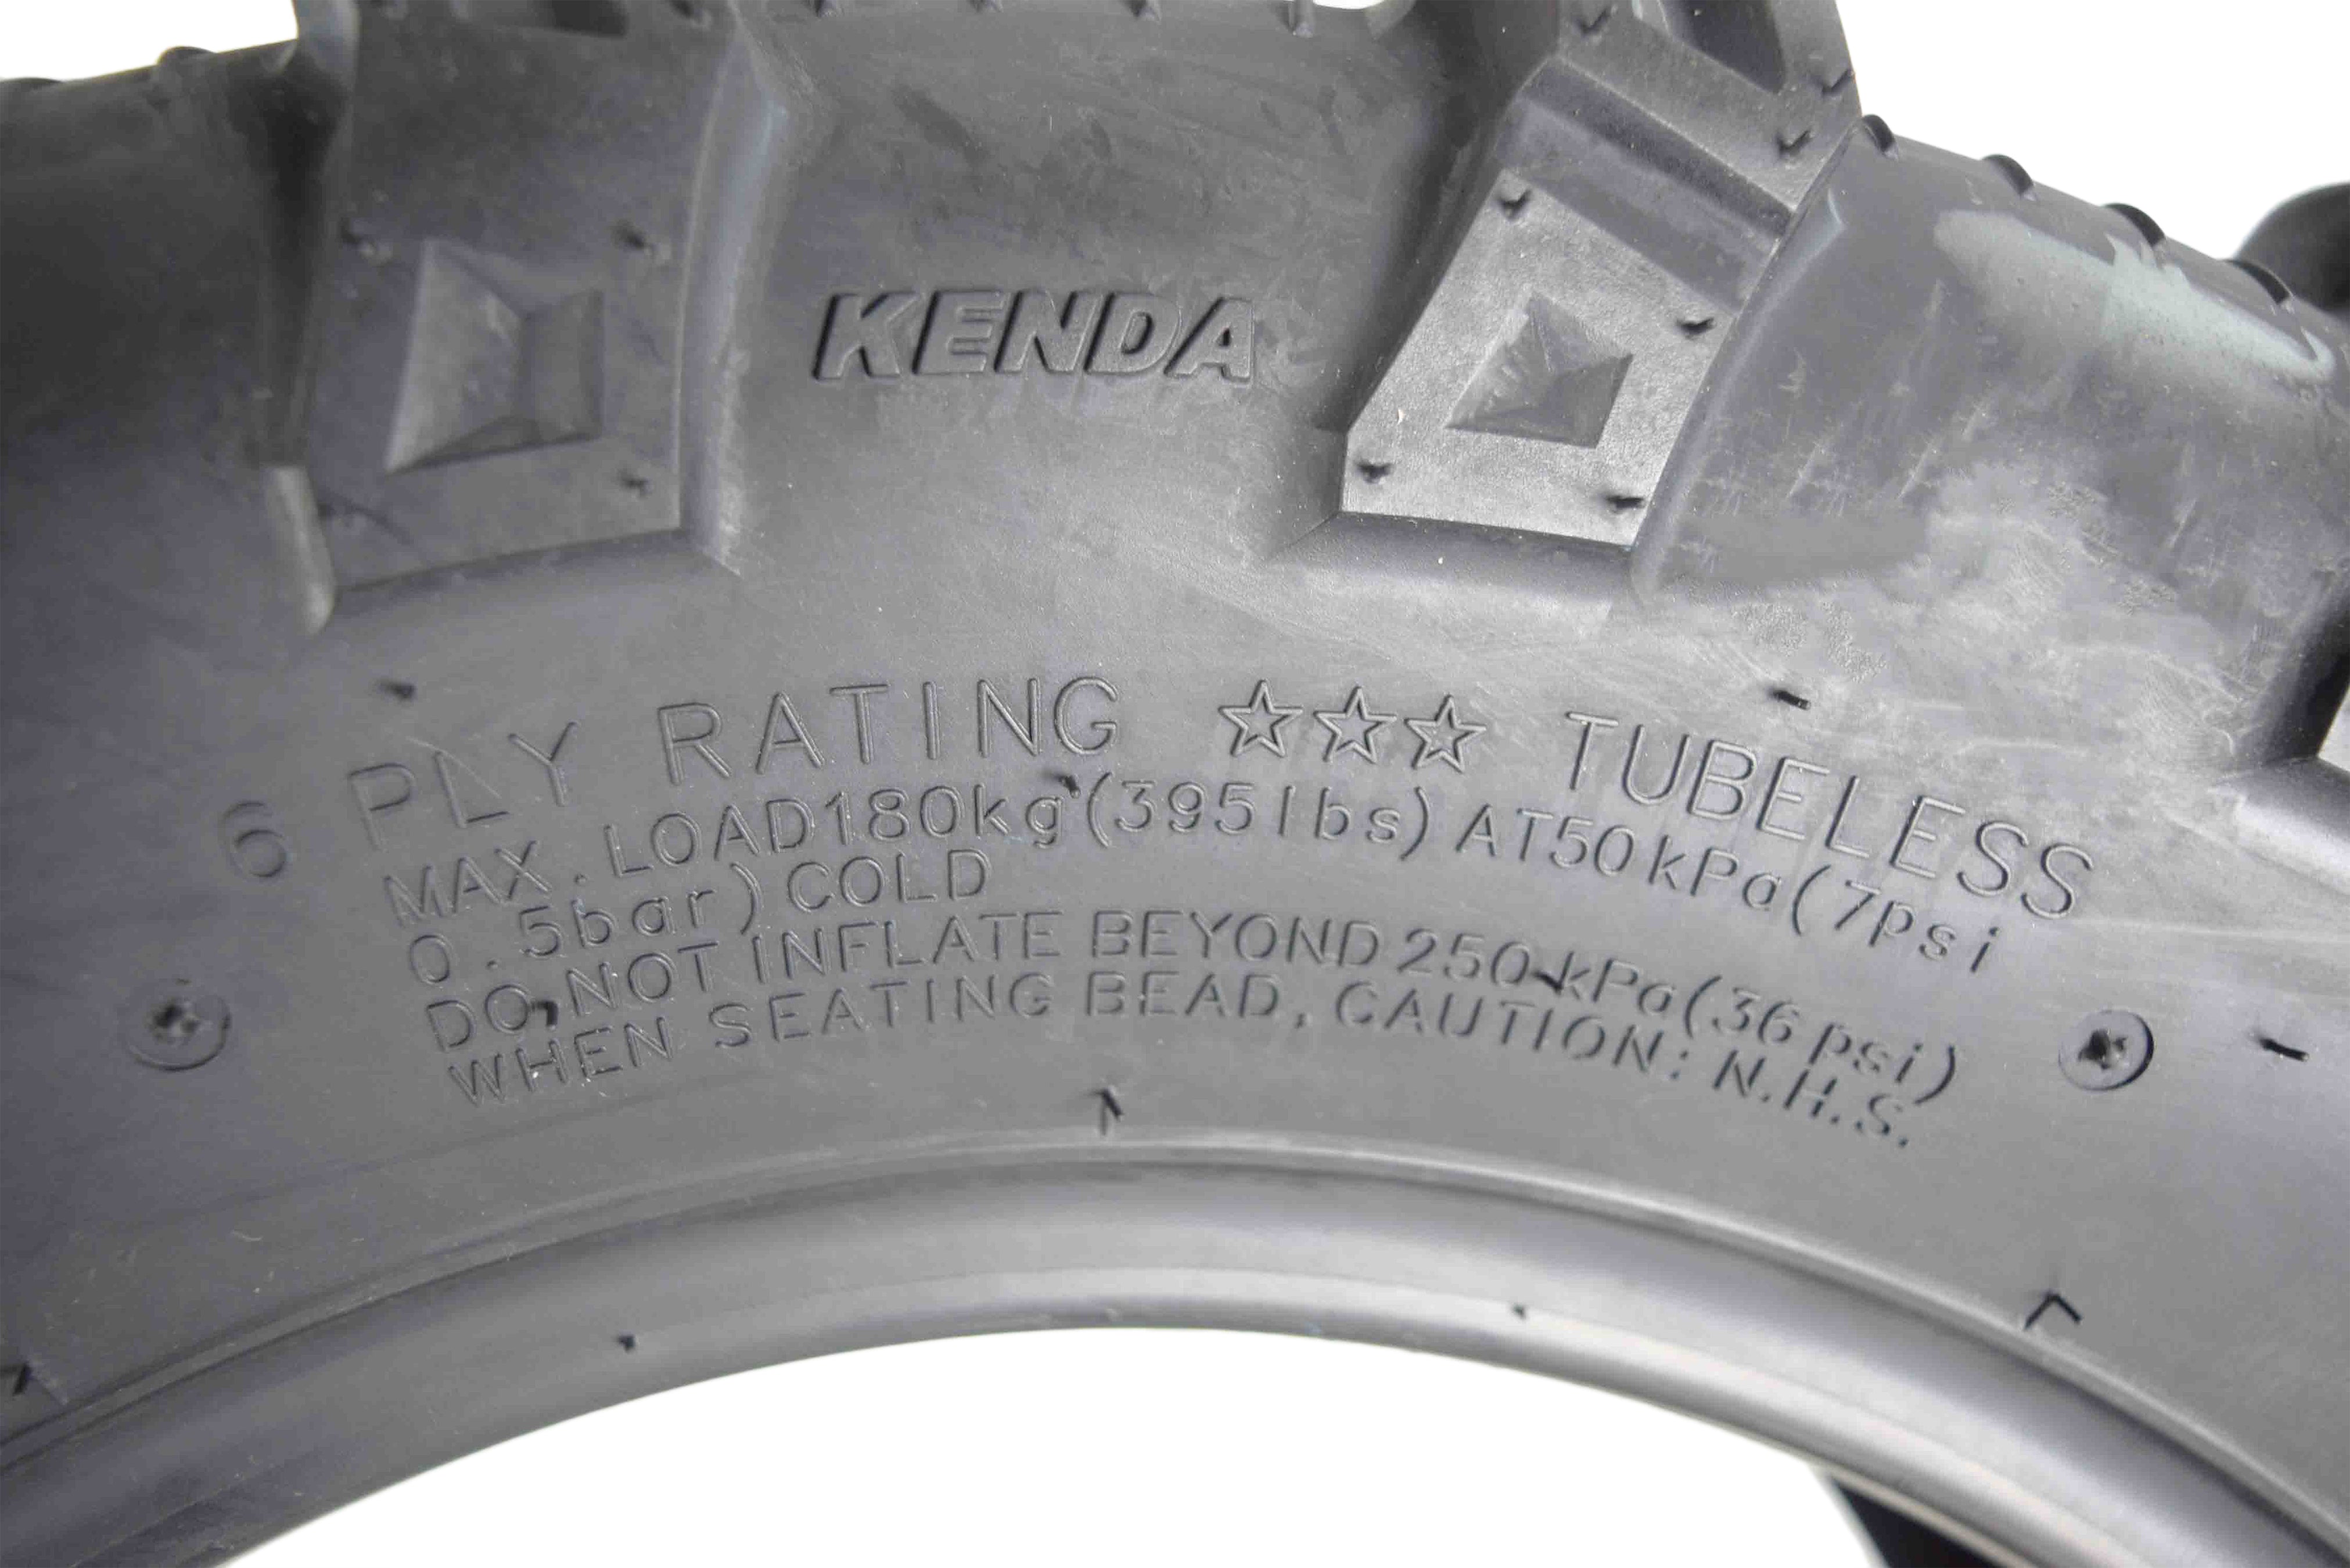 Kenda Bear Claw EVO 26x9-14 Front & 26x11-14 Rear ATV/UTV Tires Set with Bottle Opener Keychain